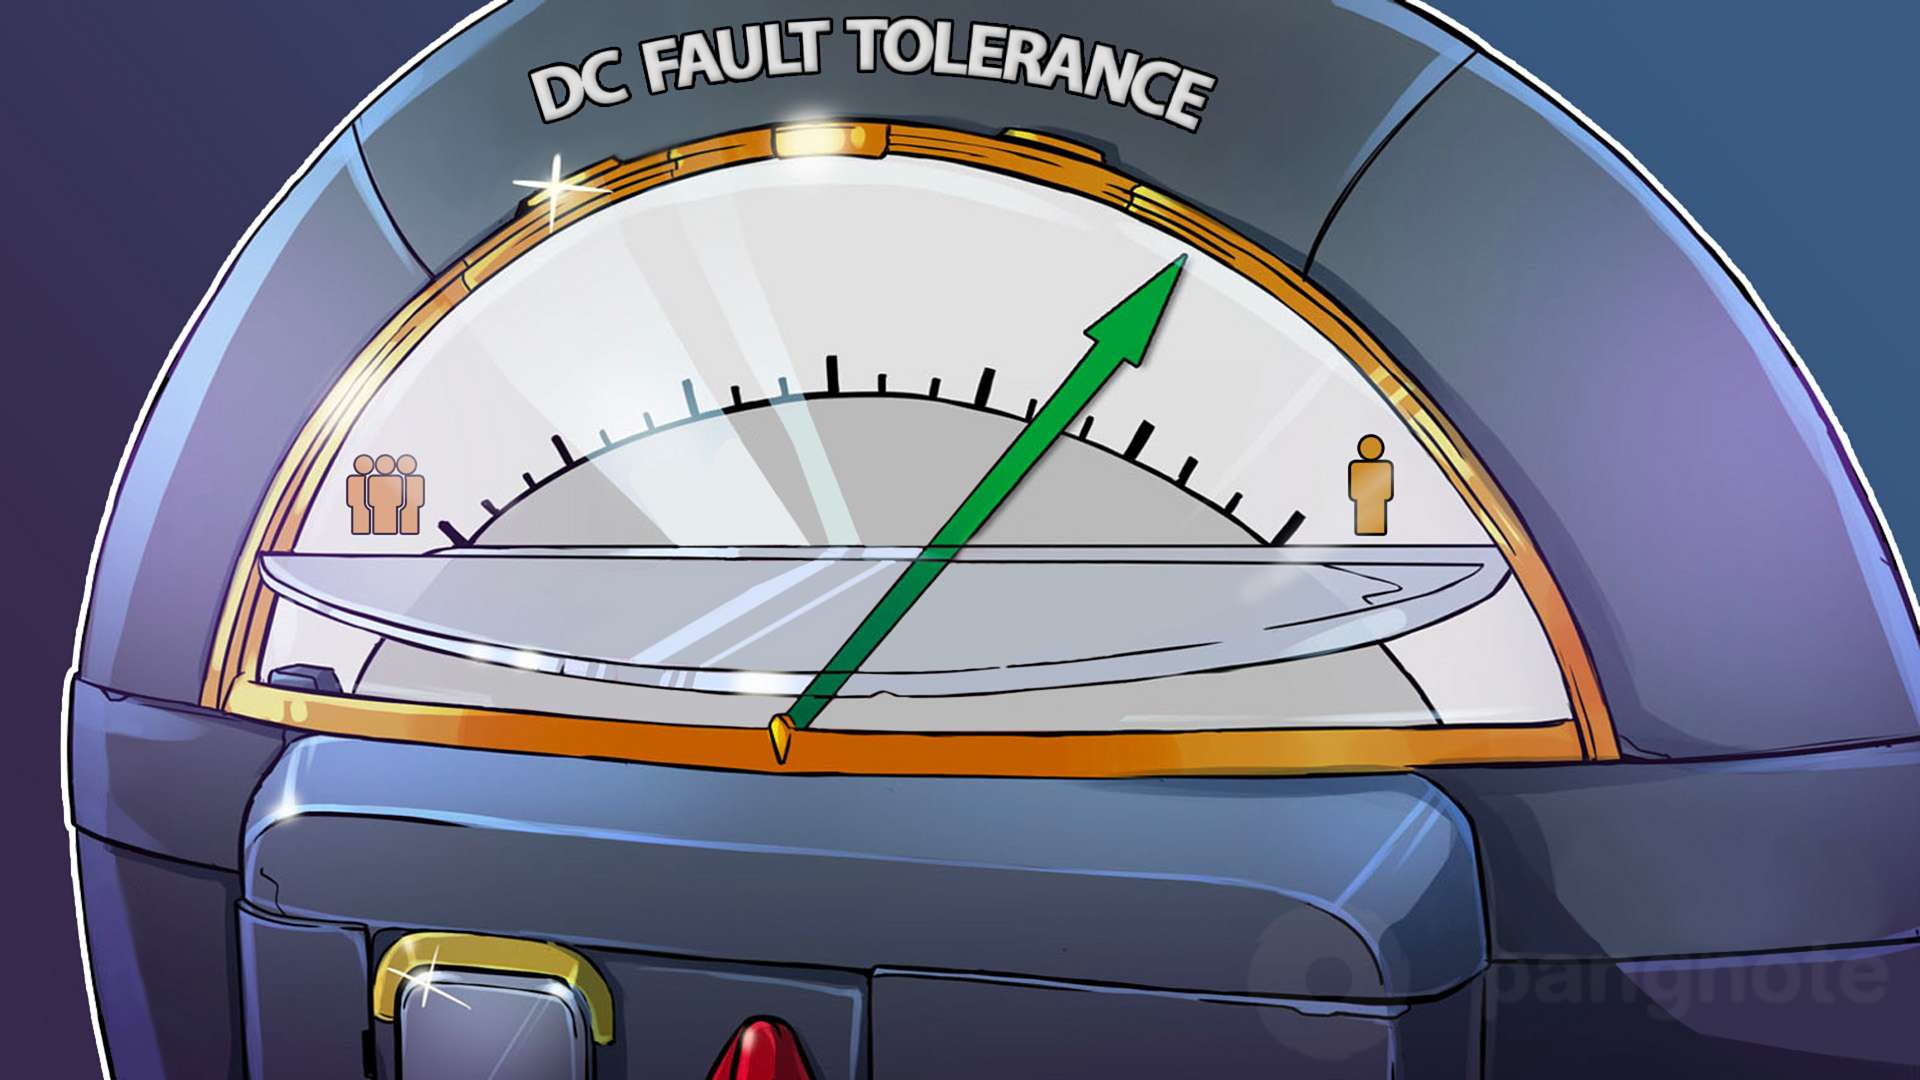 The way to increase DC fault tolerance lies through minimizing the human factor